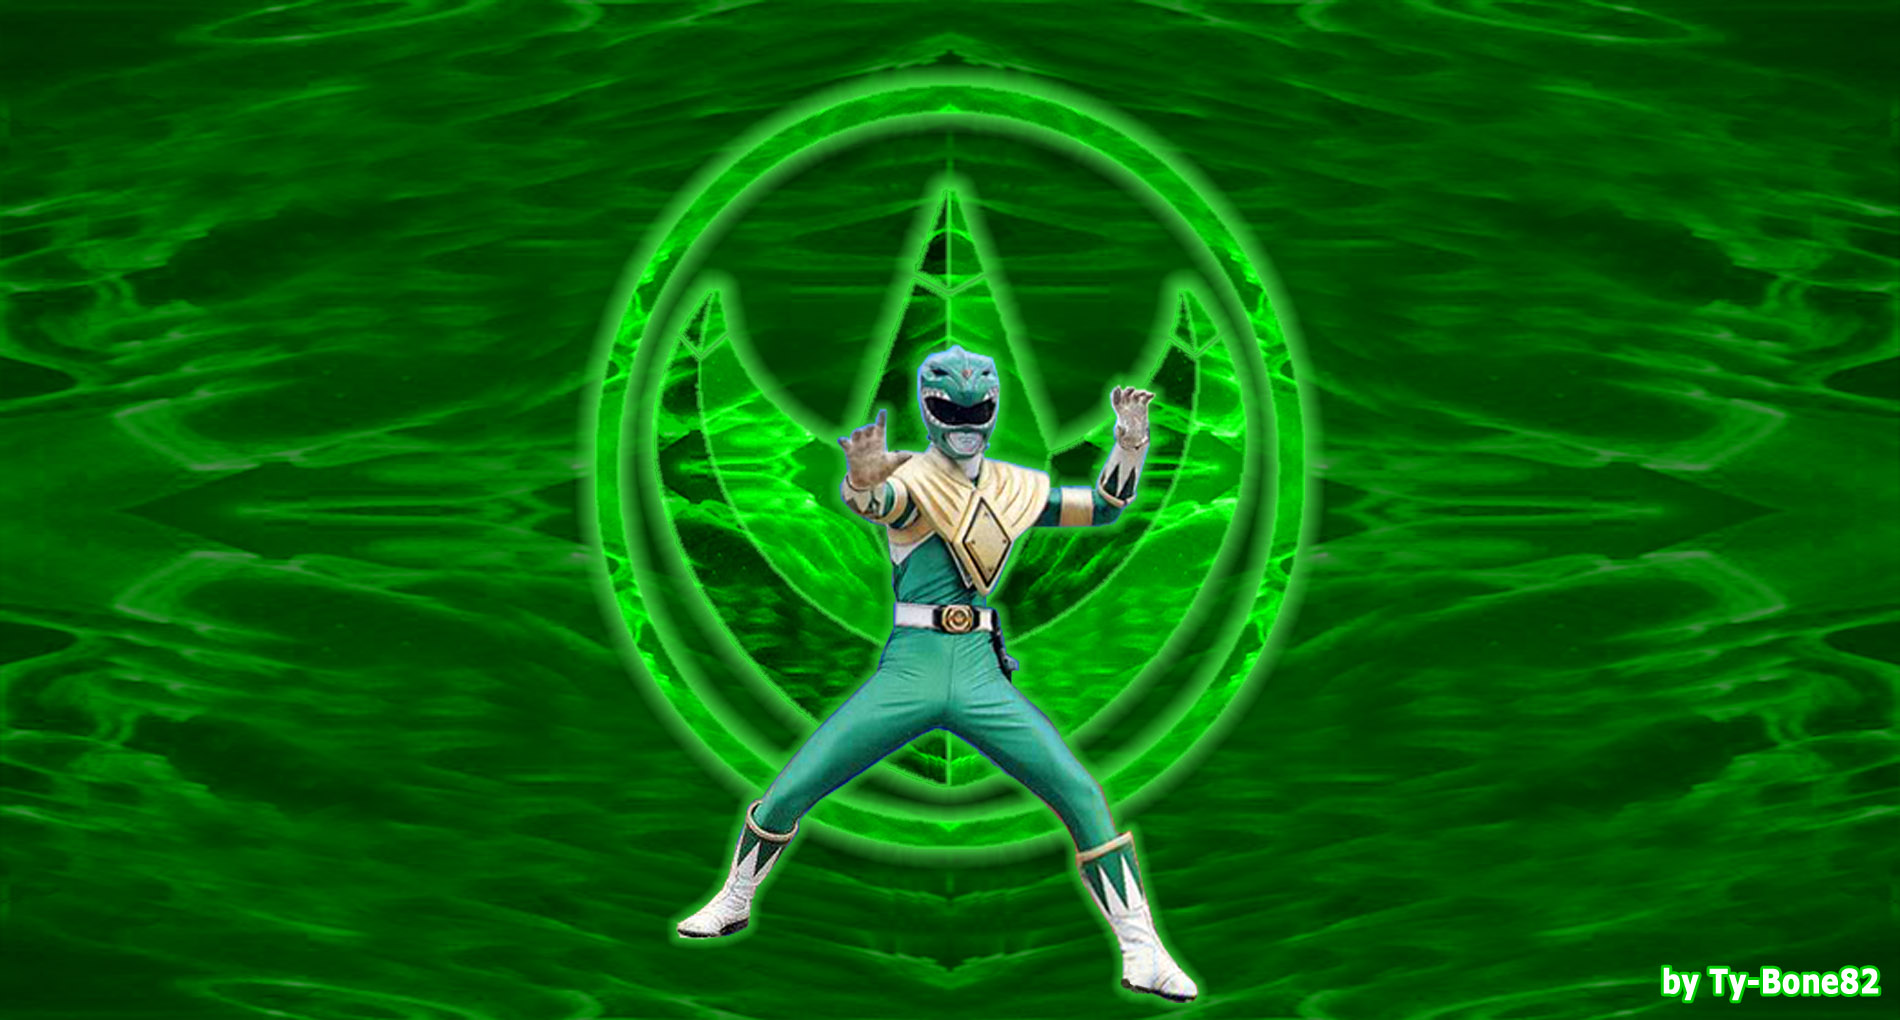 Green Power Ranger Wallpaper